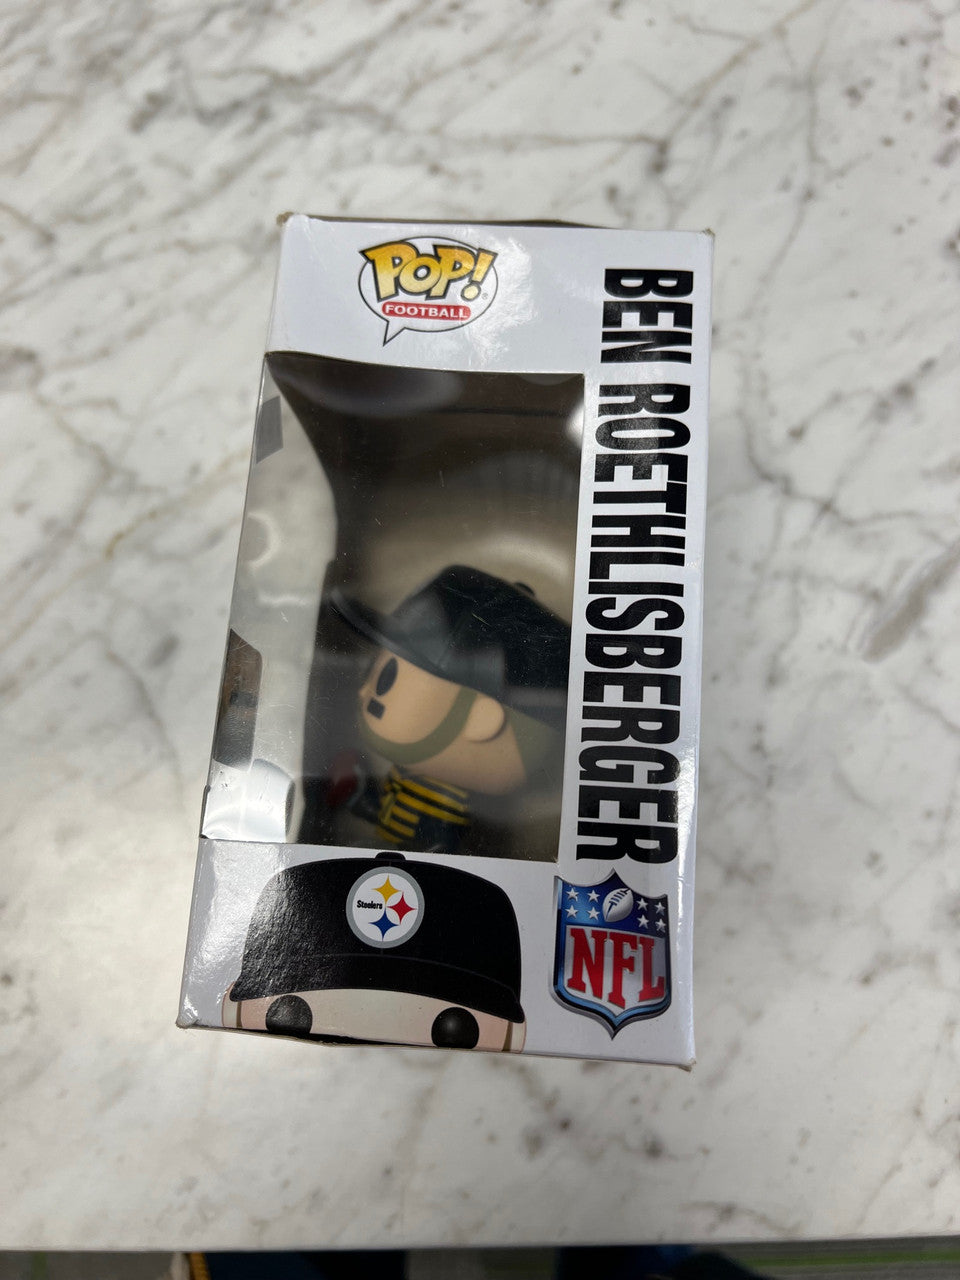 Ben Roethlisberger Throwback Jersey Toys R Us Exc. Football NFL Funko Pop 65